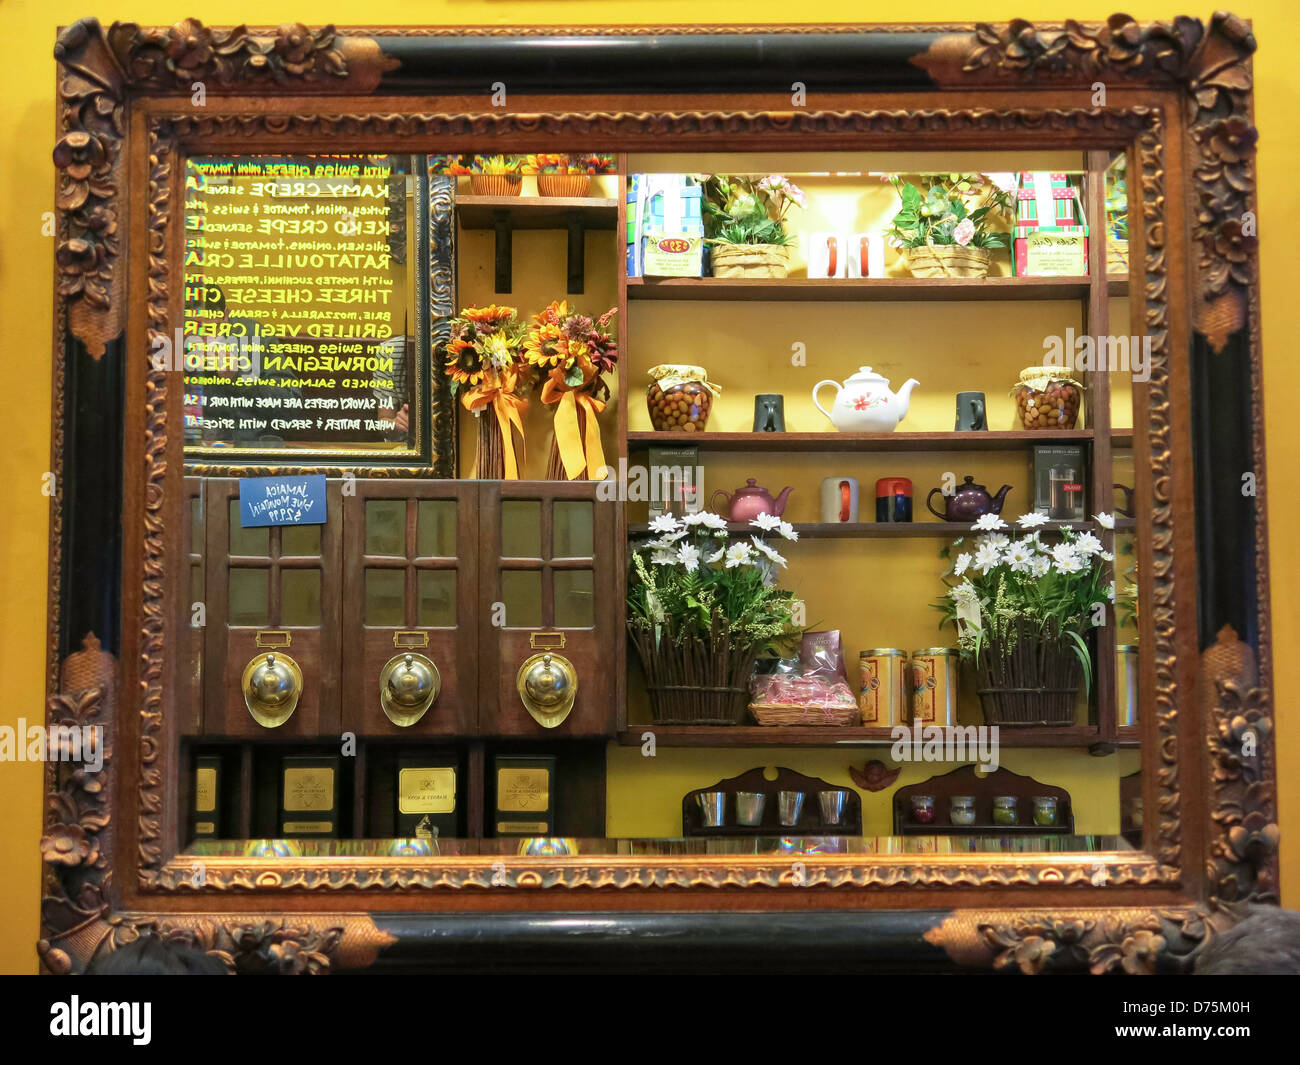 Keko Coffee and Tea Salon Interior Display, NYC Stock Photo